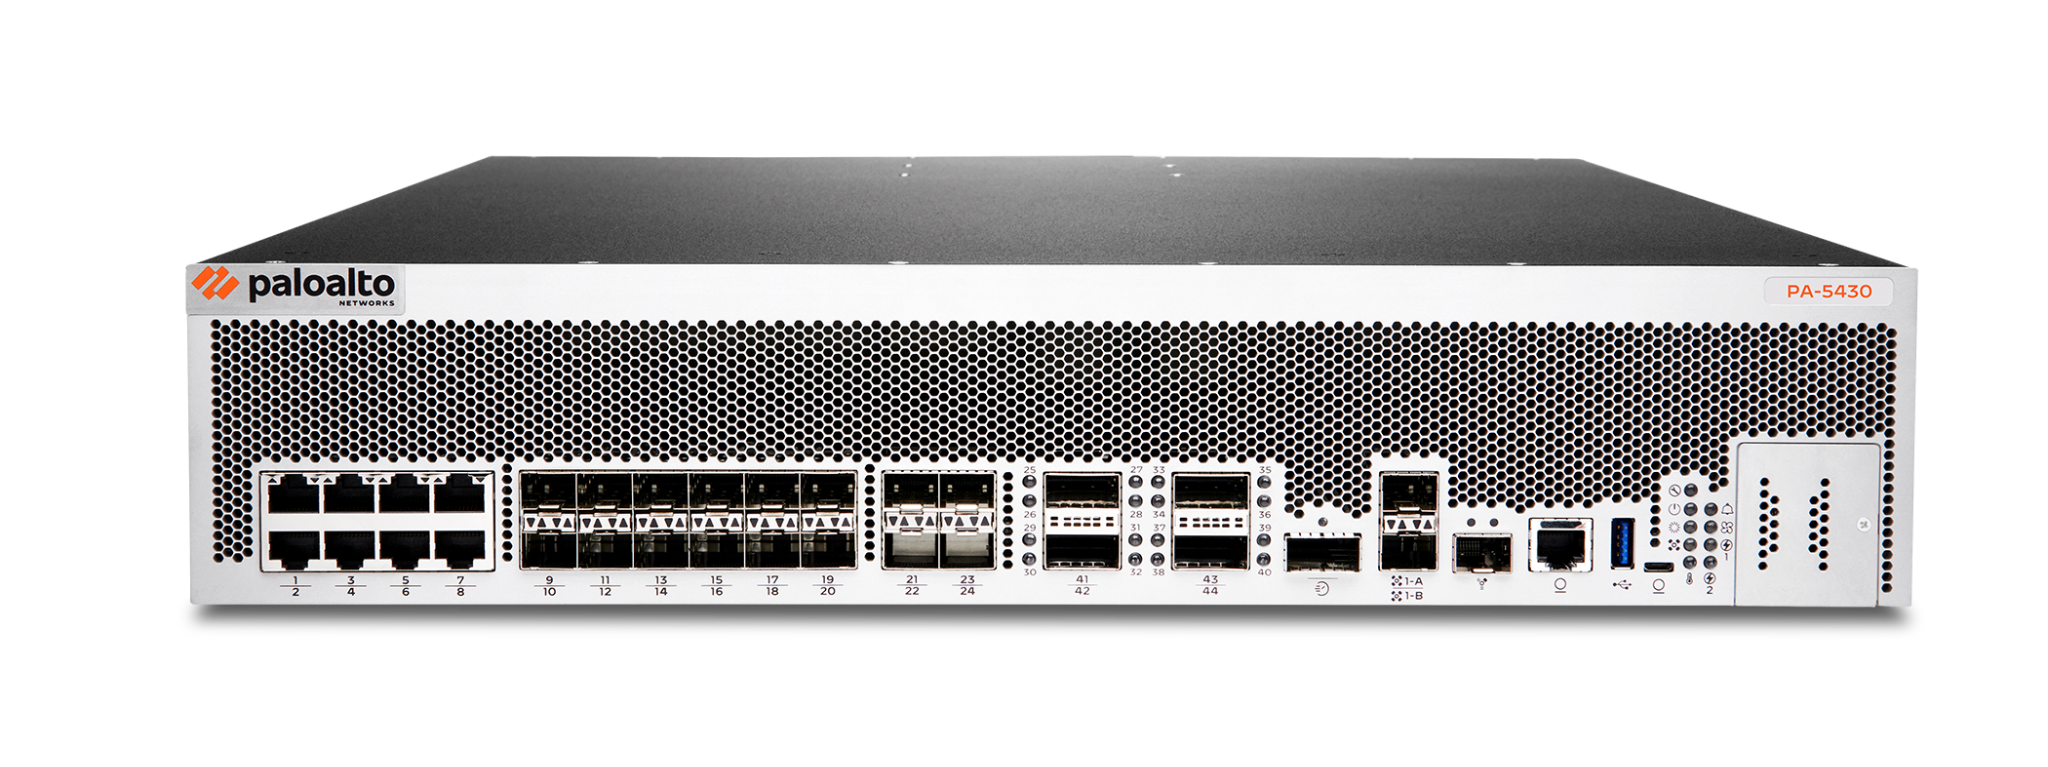 Palo Alto Networks PA-5400 Series Nebula hardware